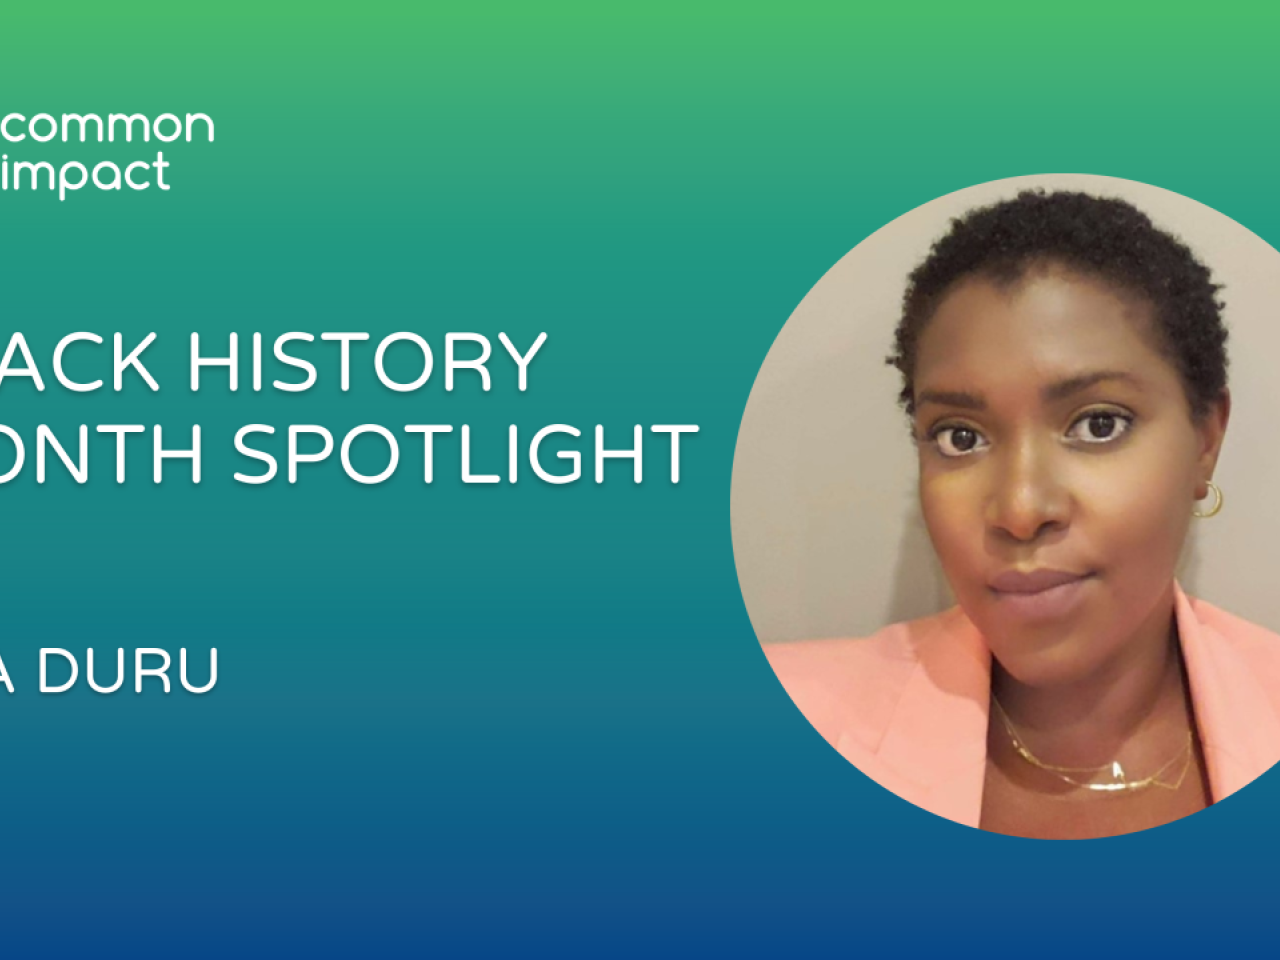 Ola Duru Black History Month Spotlight